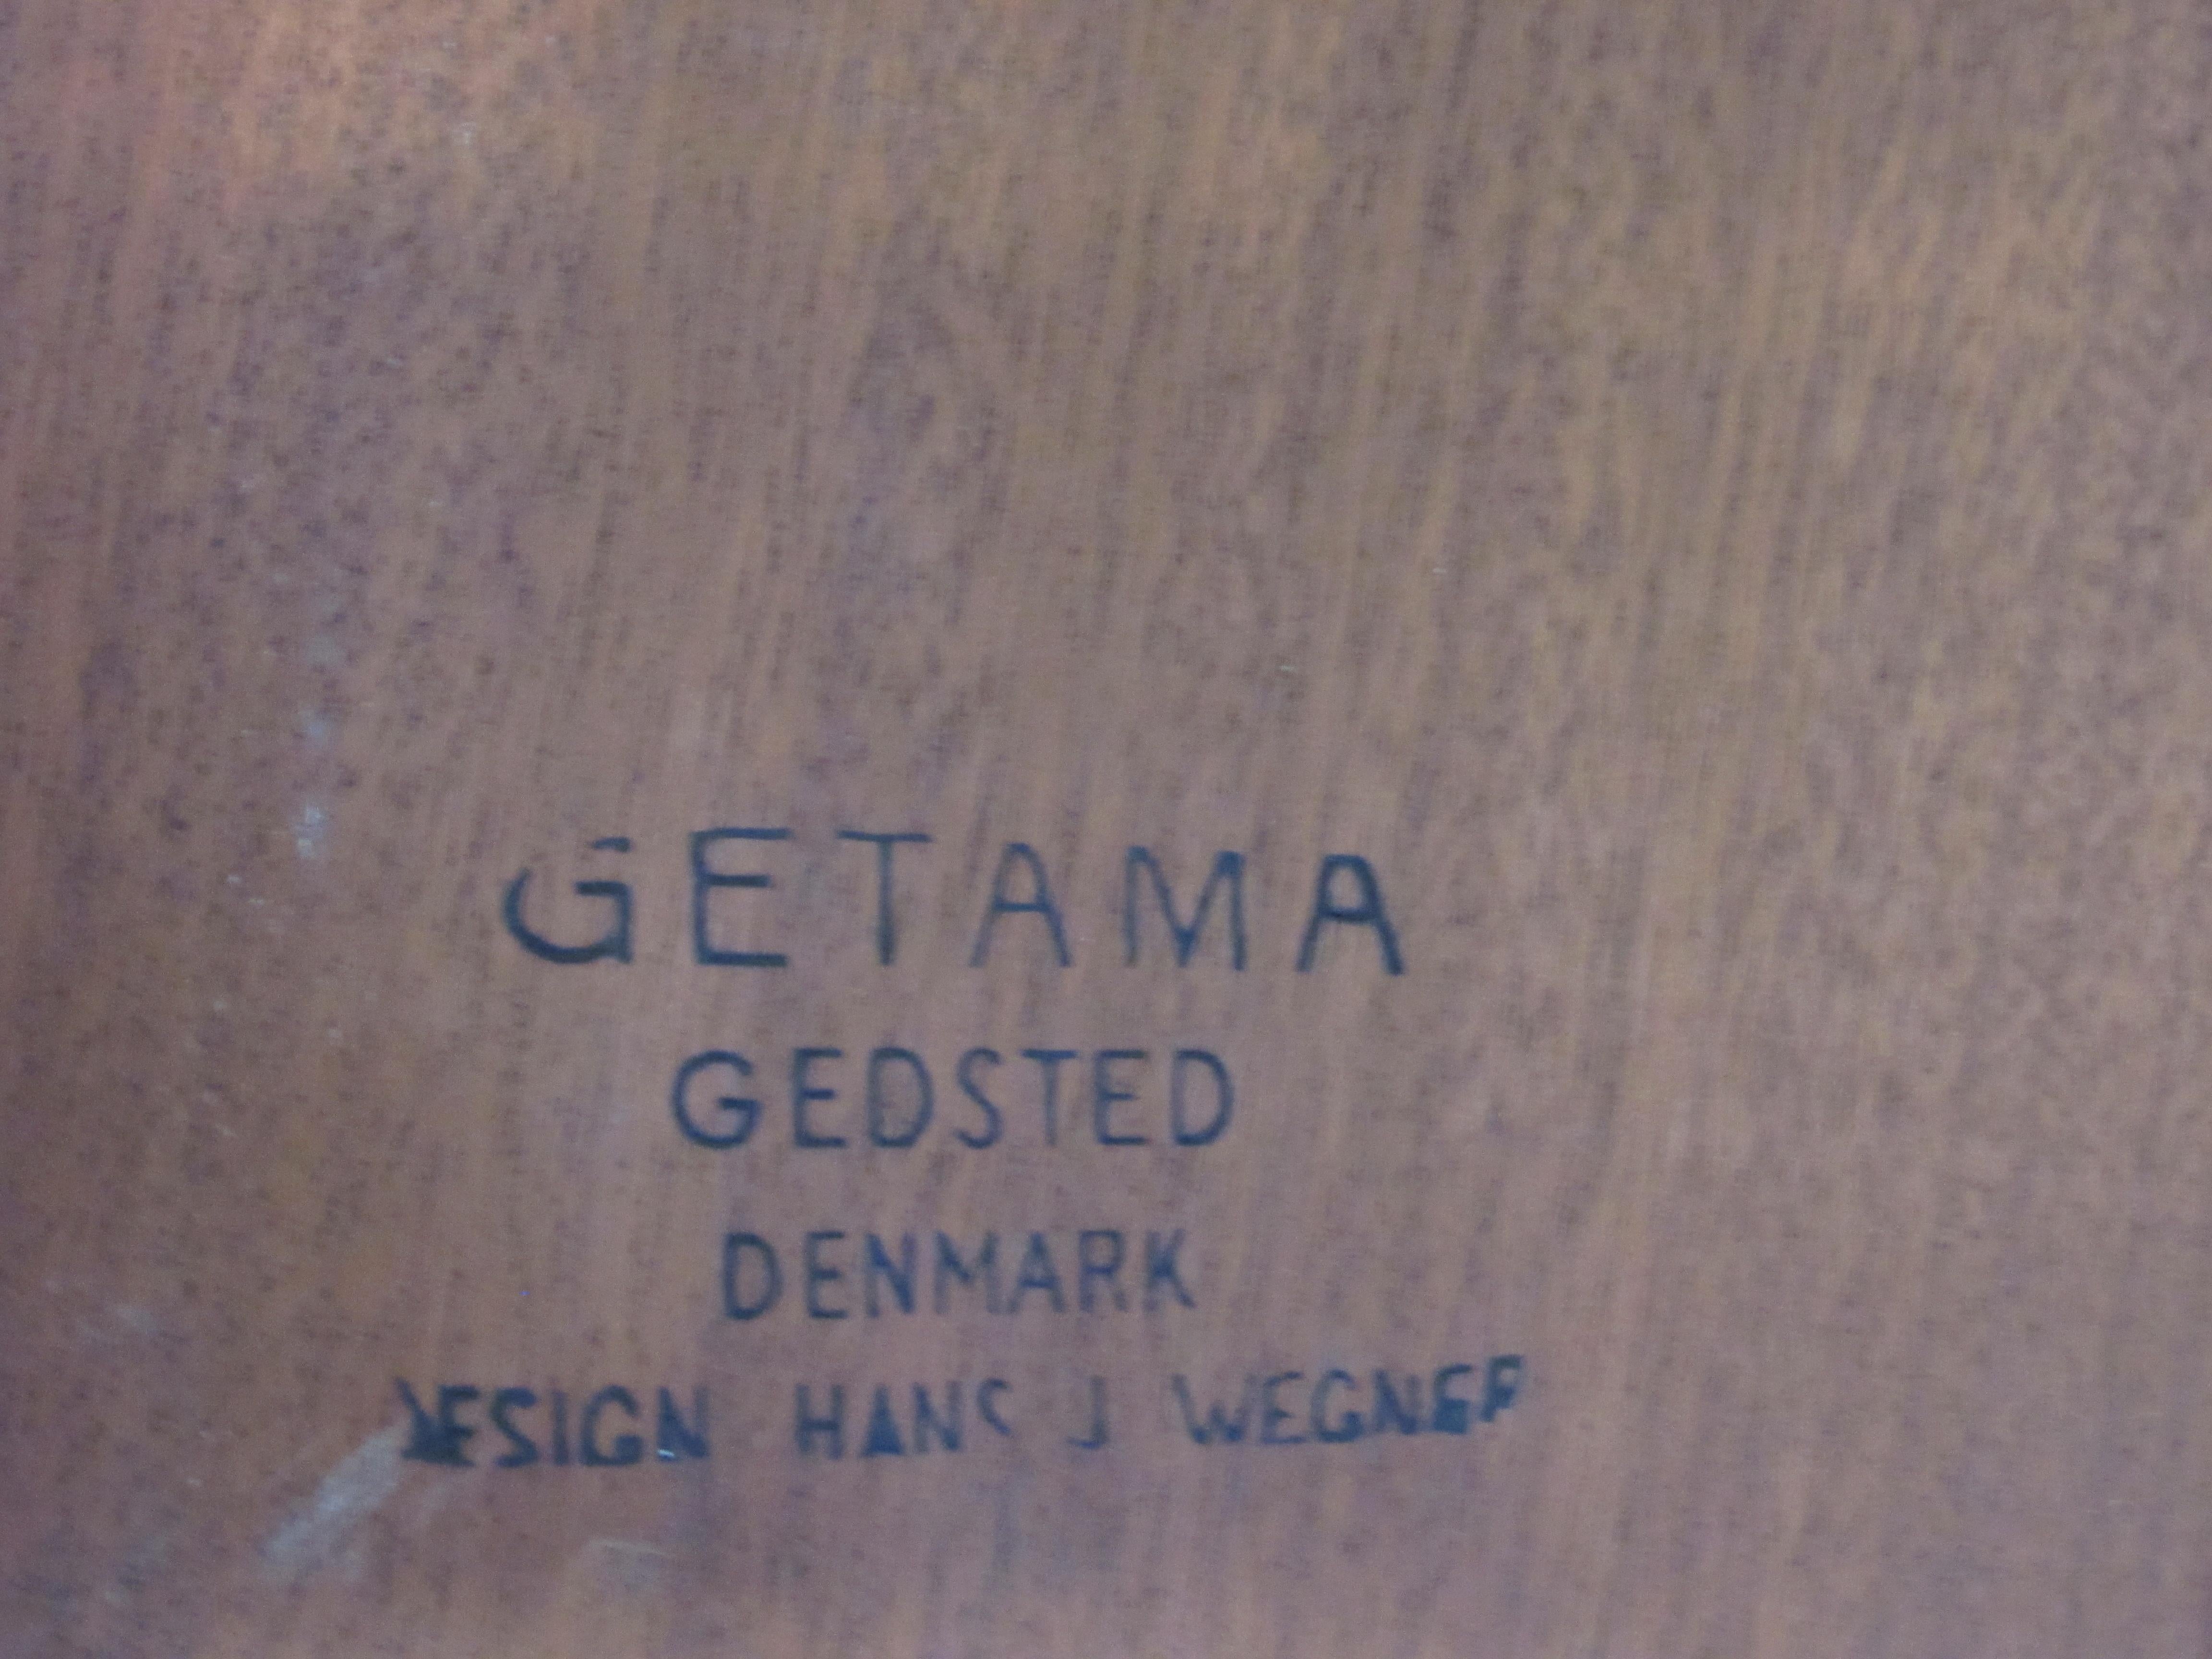 Hans J. Wegner Floating Teak Queen Headboard by GETAMA, Denmark 2